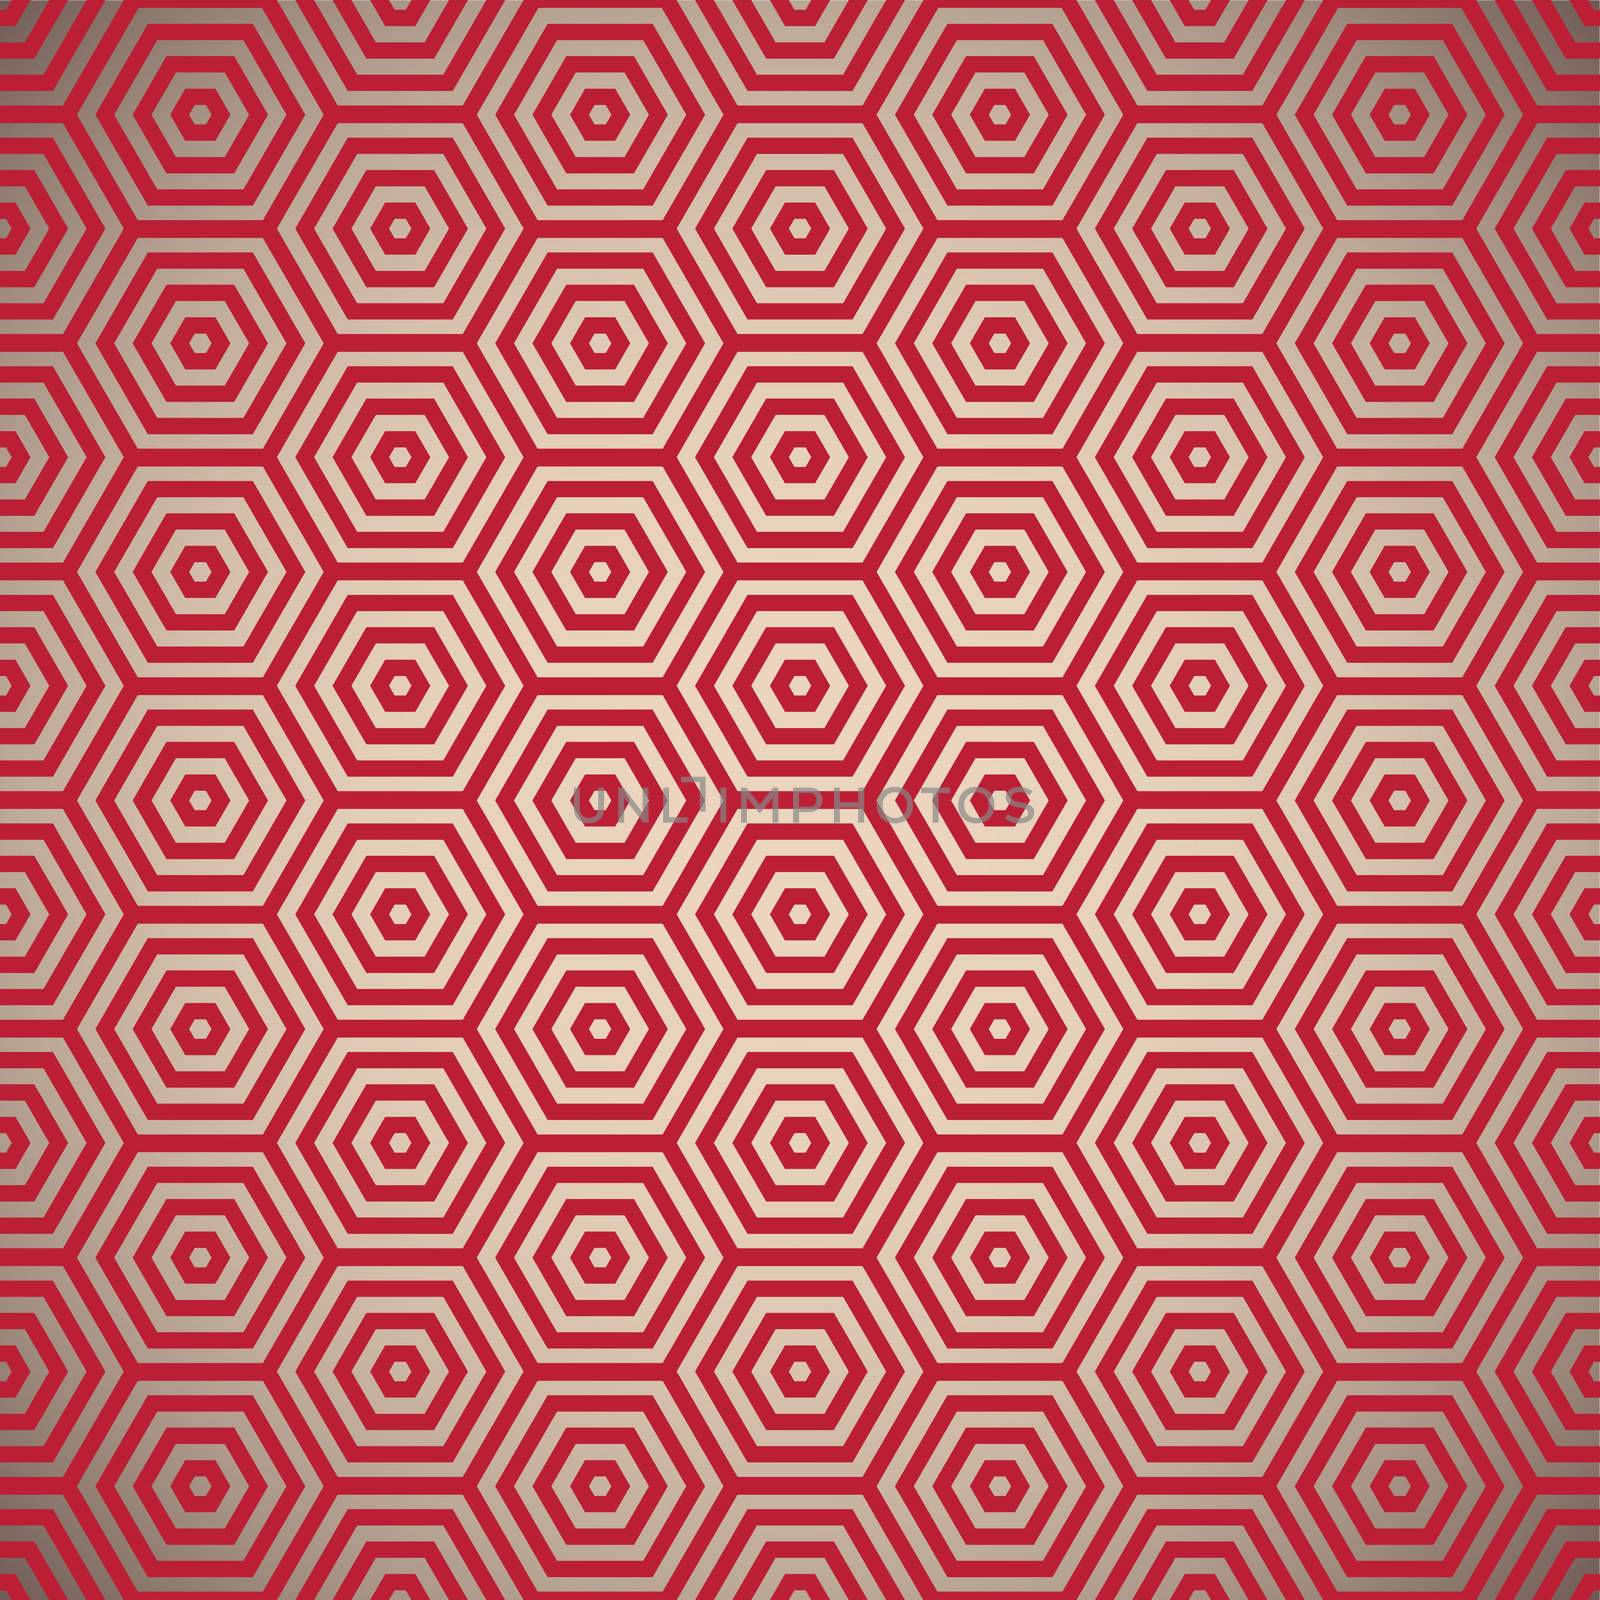 Retro seventies red pattern by nicemonkey